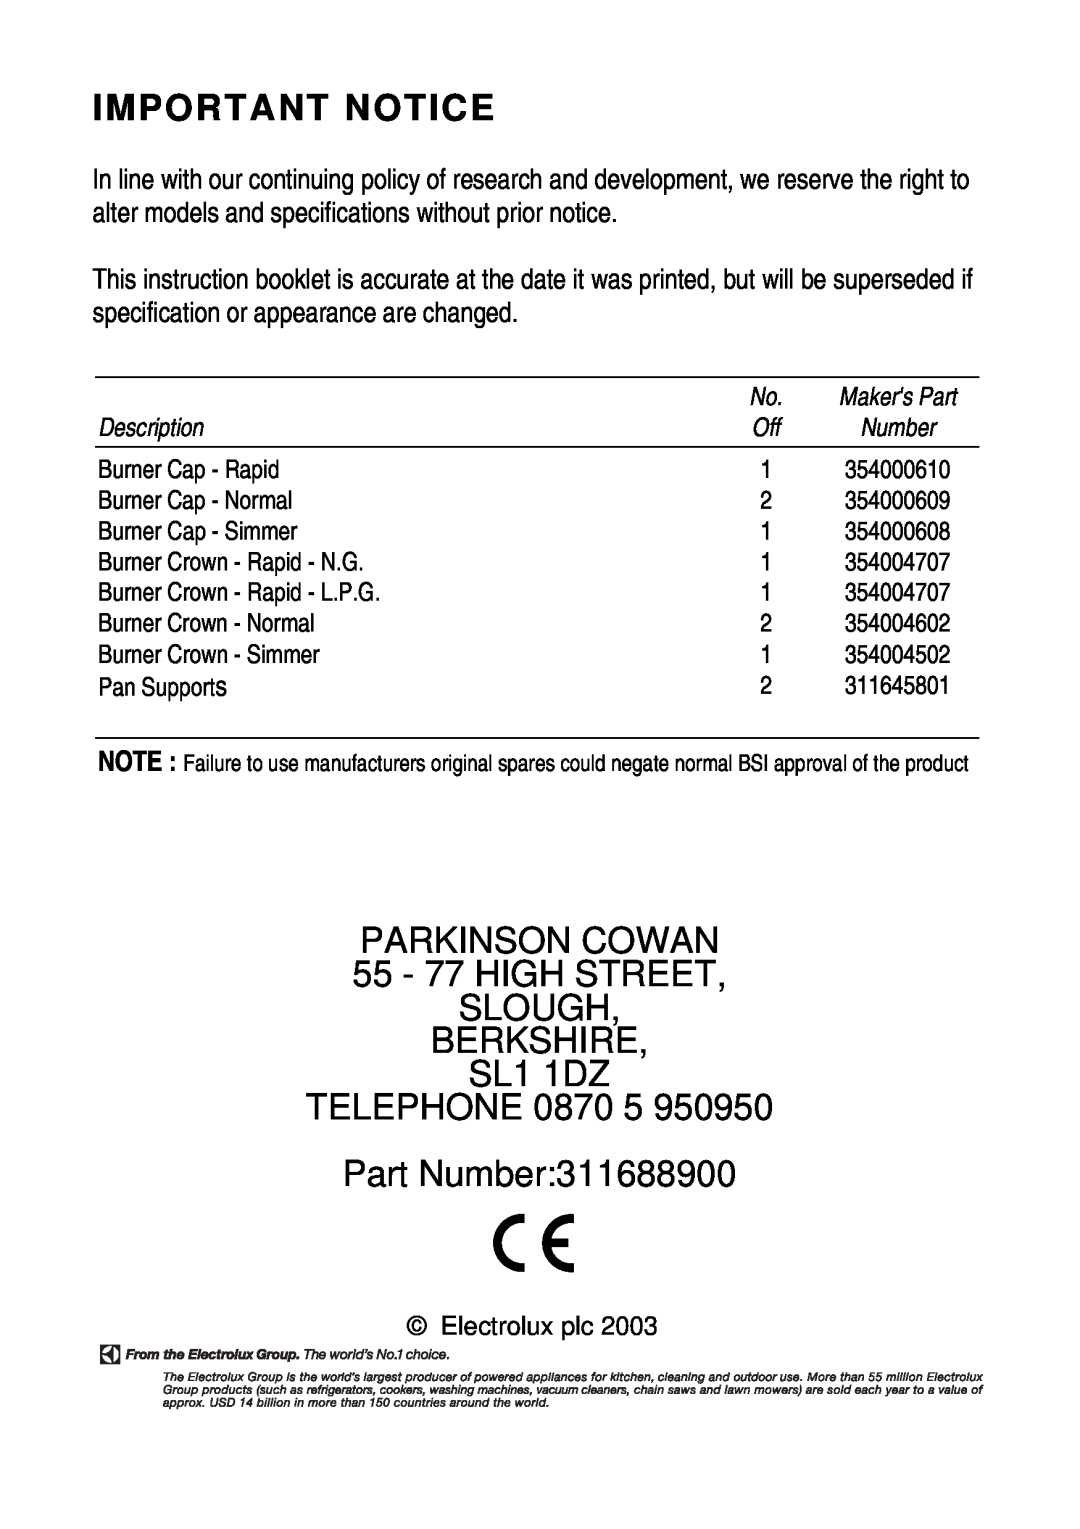 Electrolux CSG 558 installation instructions Important Notice, PARKINSON COWAN 55 - 77 HIGH STREET SLOUGH BERKSHIRE SL1 1DZ 